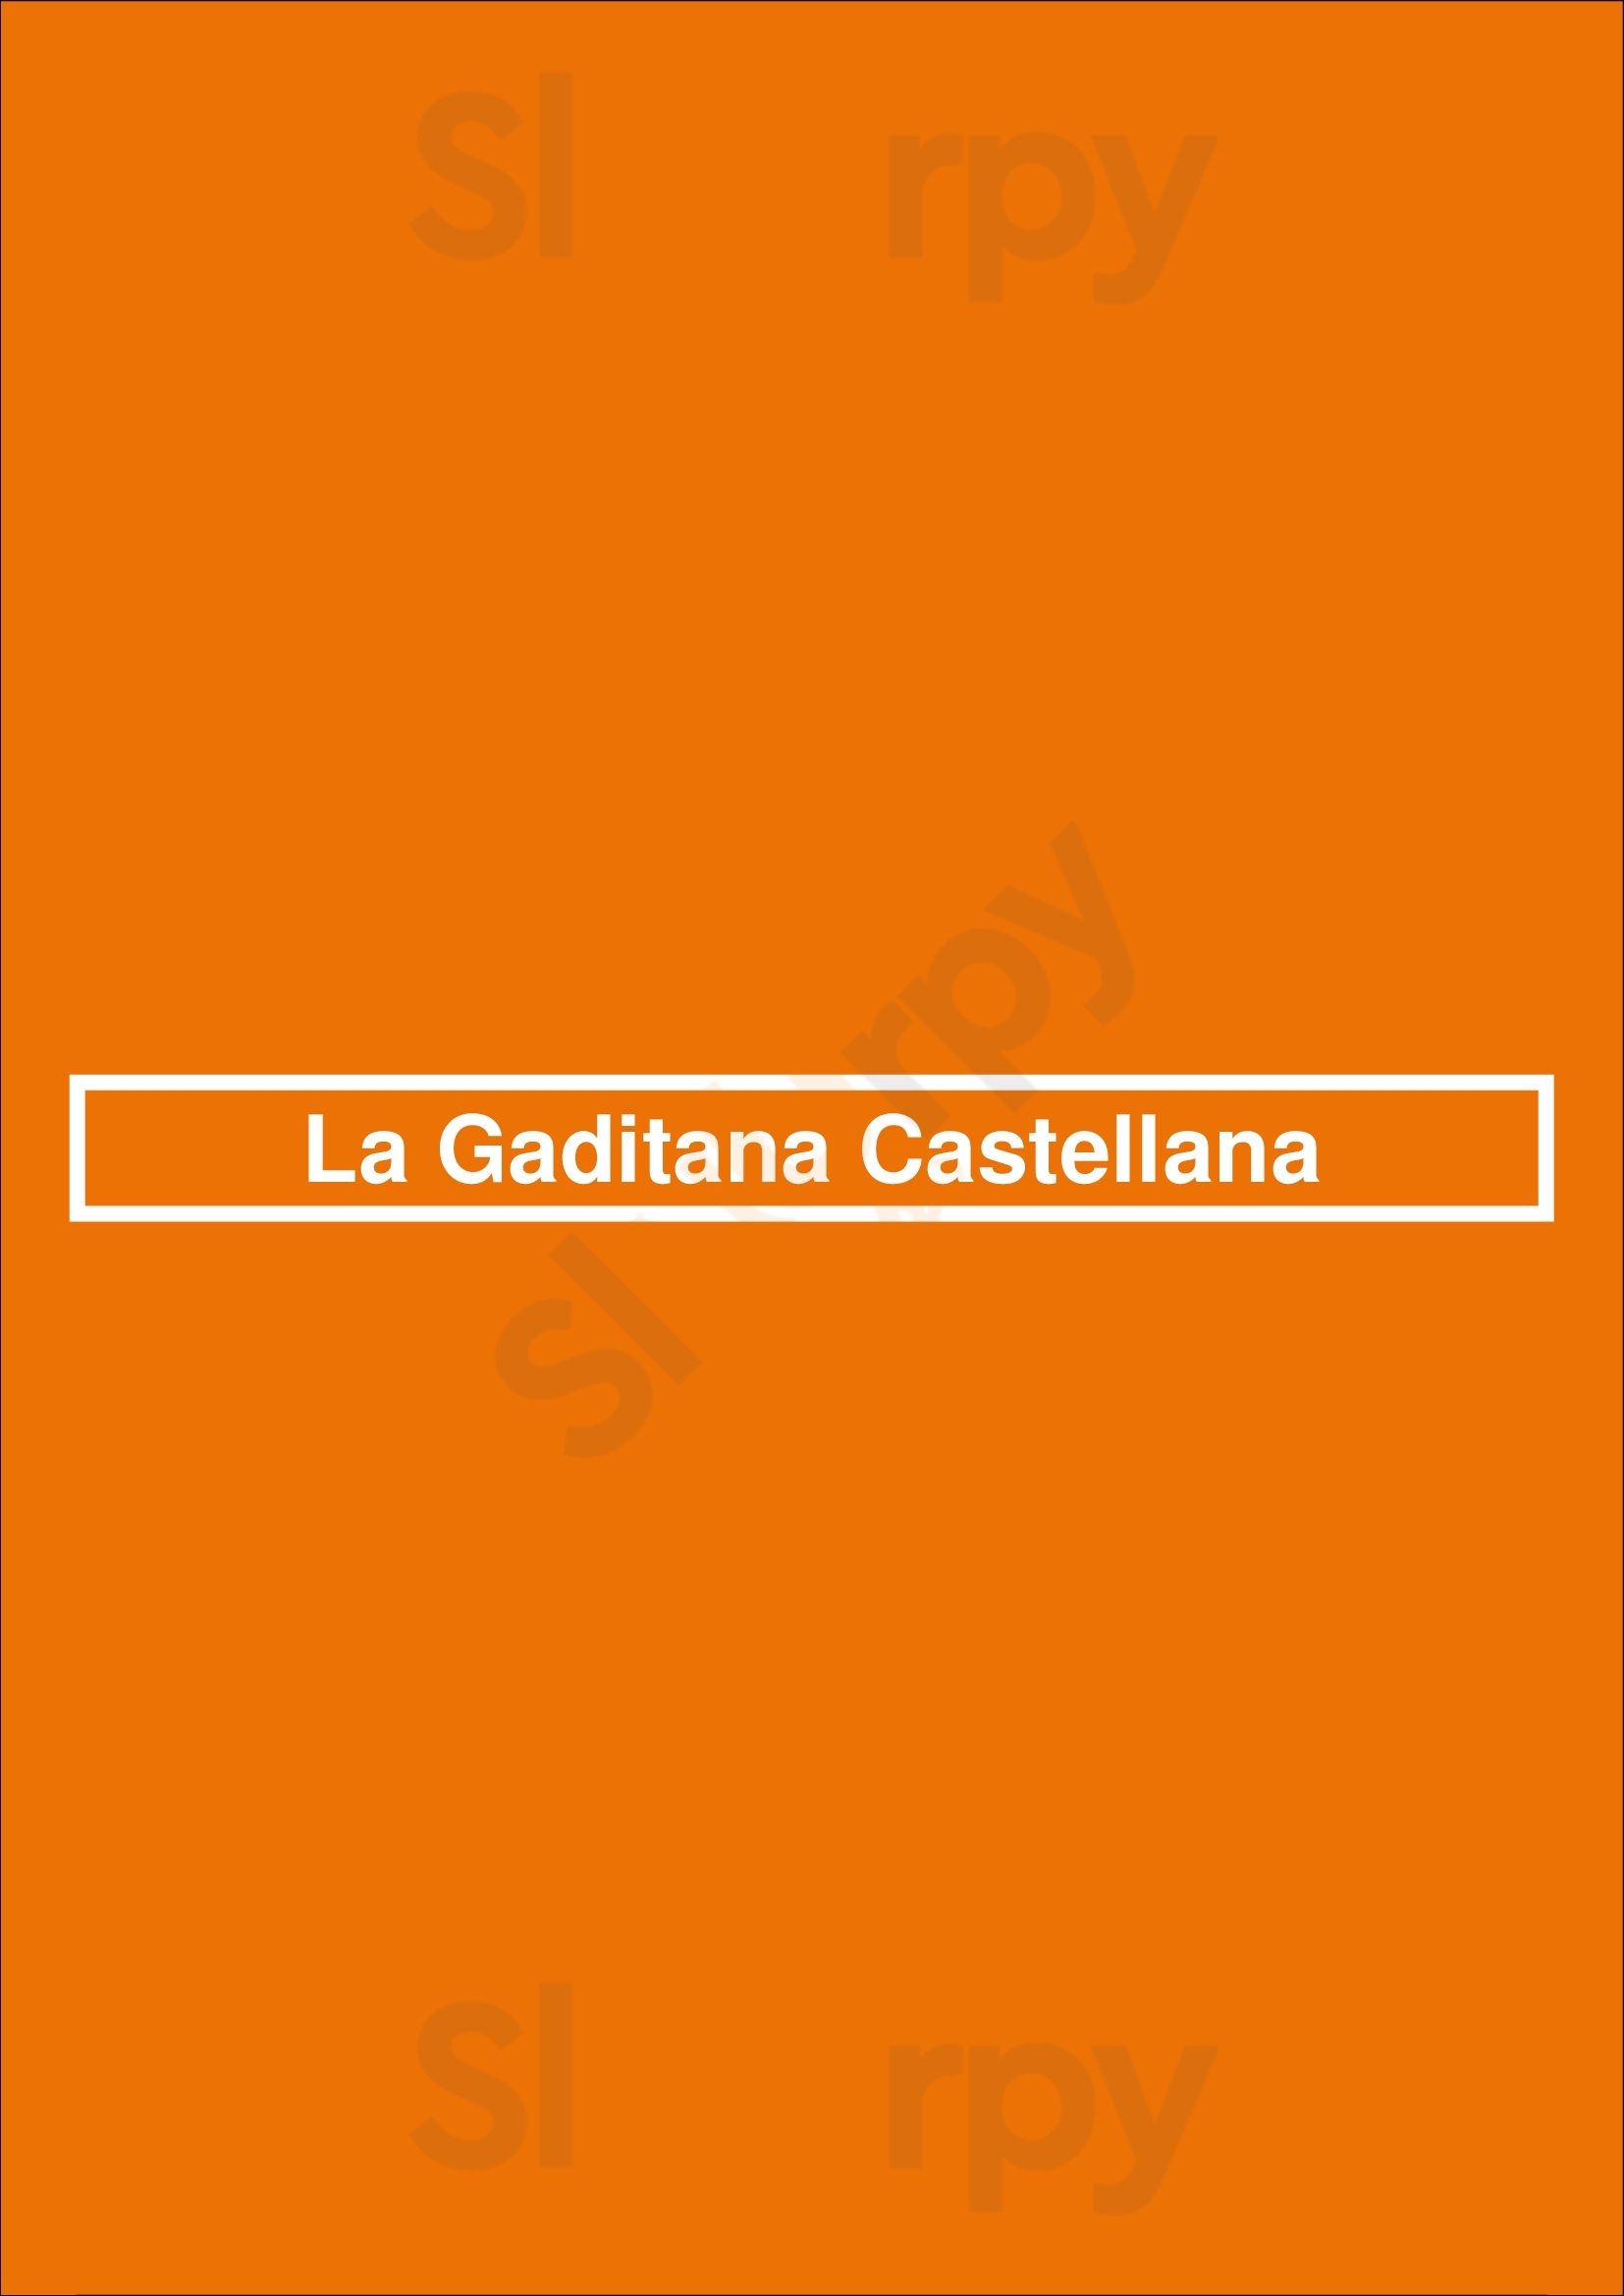 La Gaditana Castellana Madrid Menu - 1